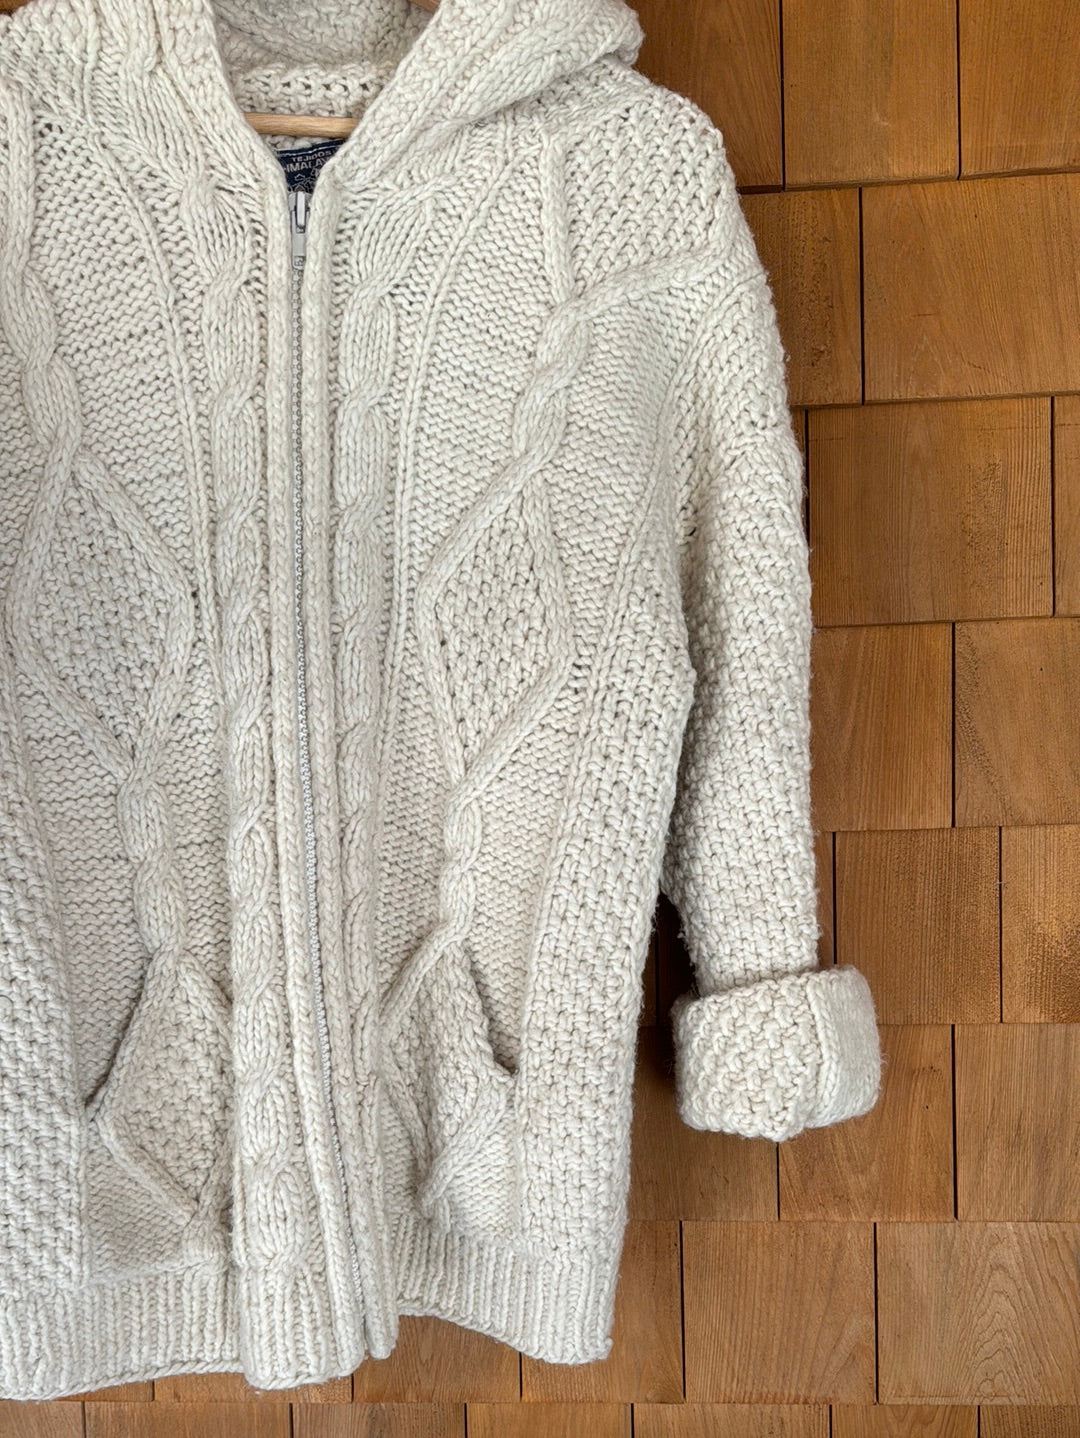 Vintage Wool Fisherman's Cardigan Sweater